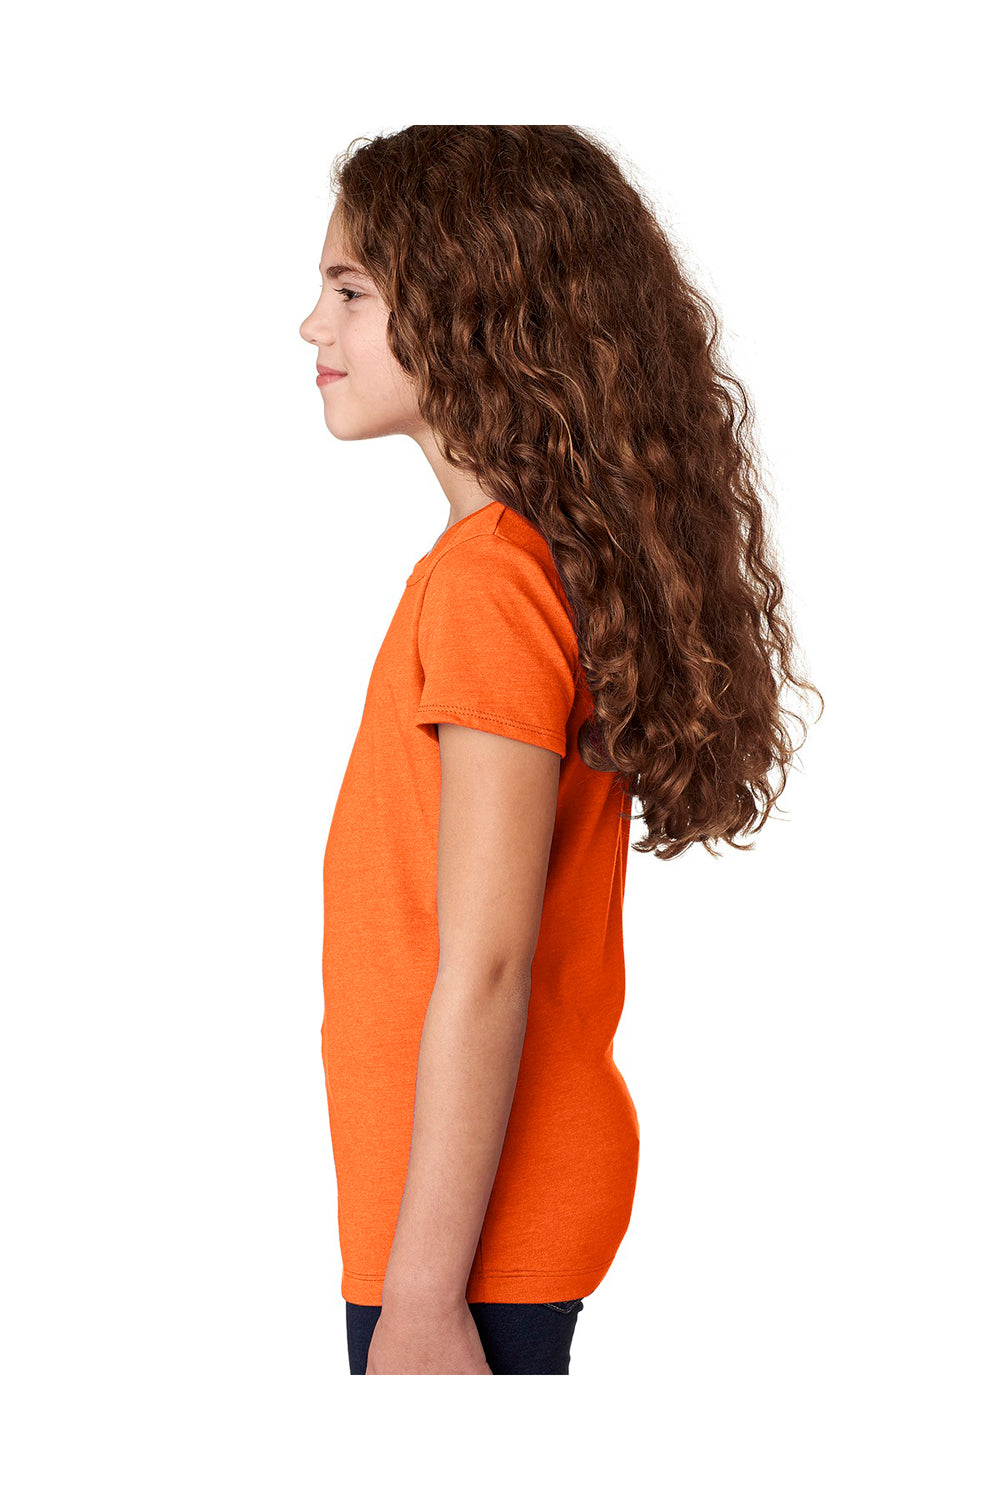 Next Level 3712 Youth Princess CVC Jersey Short Sleeve Crewneck T-Shirt Orange Side